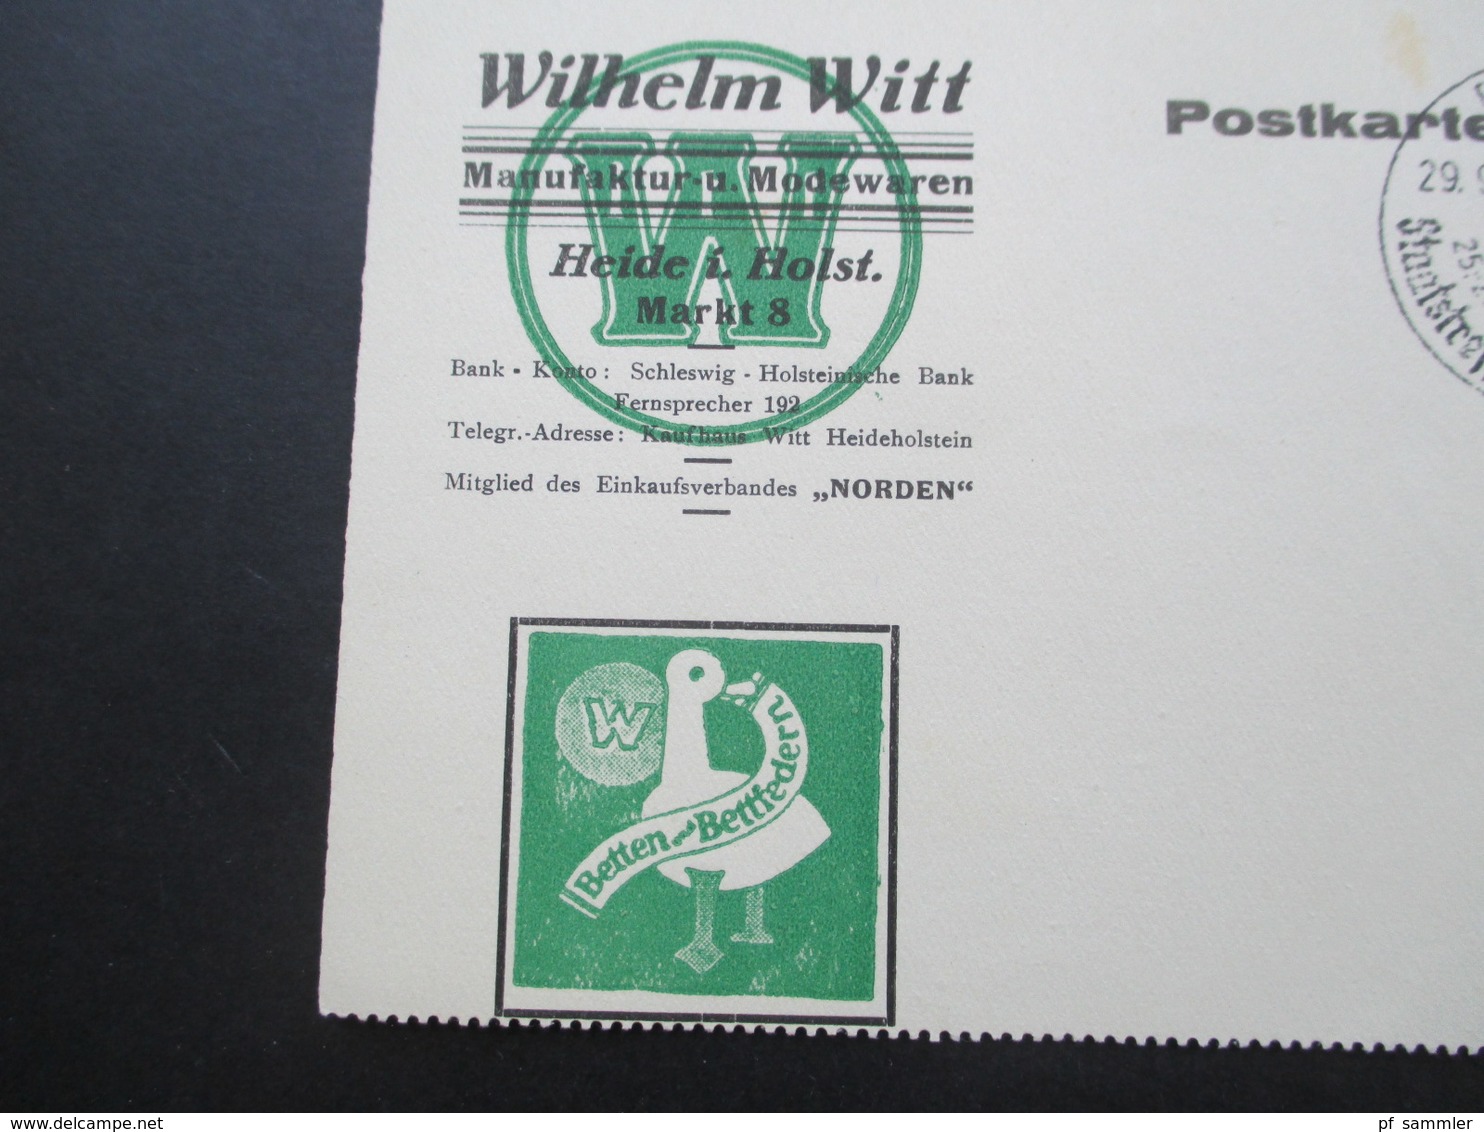 AK Werbepostkarte 1937 Wilhelm Witt Modeware / Betten / Bettfedern. SST Berlin Staatstreffen Mussolini - Hitler - Advertising